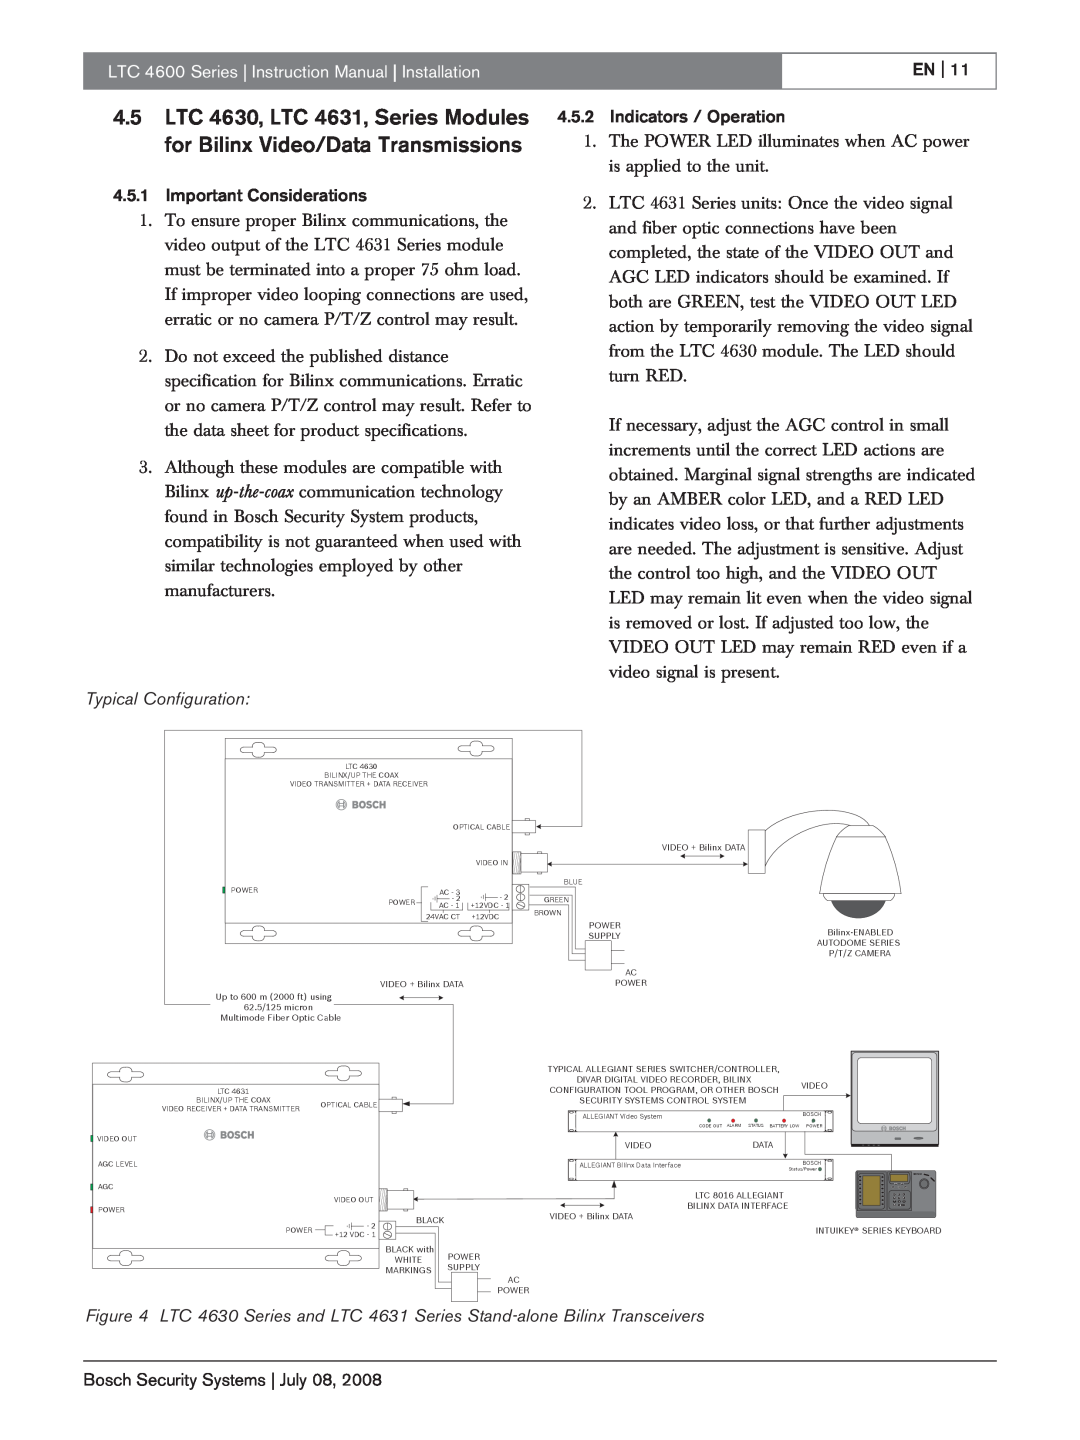 Bosch Appliances LTC 4600 4.5.1Important Considerations, EN 4.5.2Indicators / Operation, Typical Configuration 